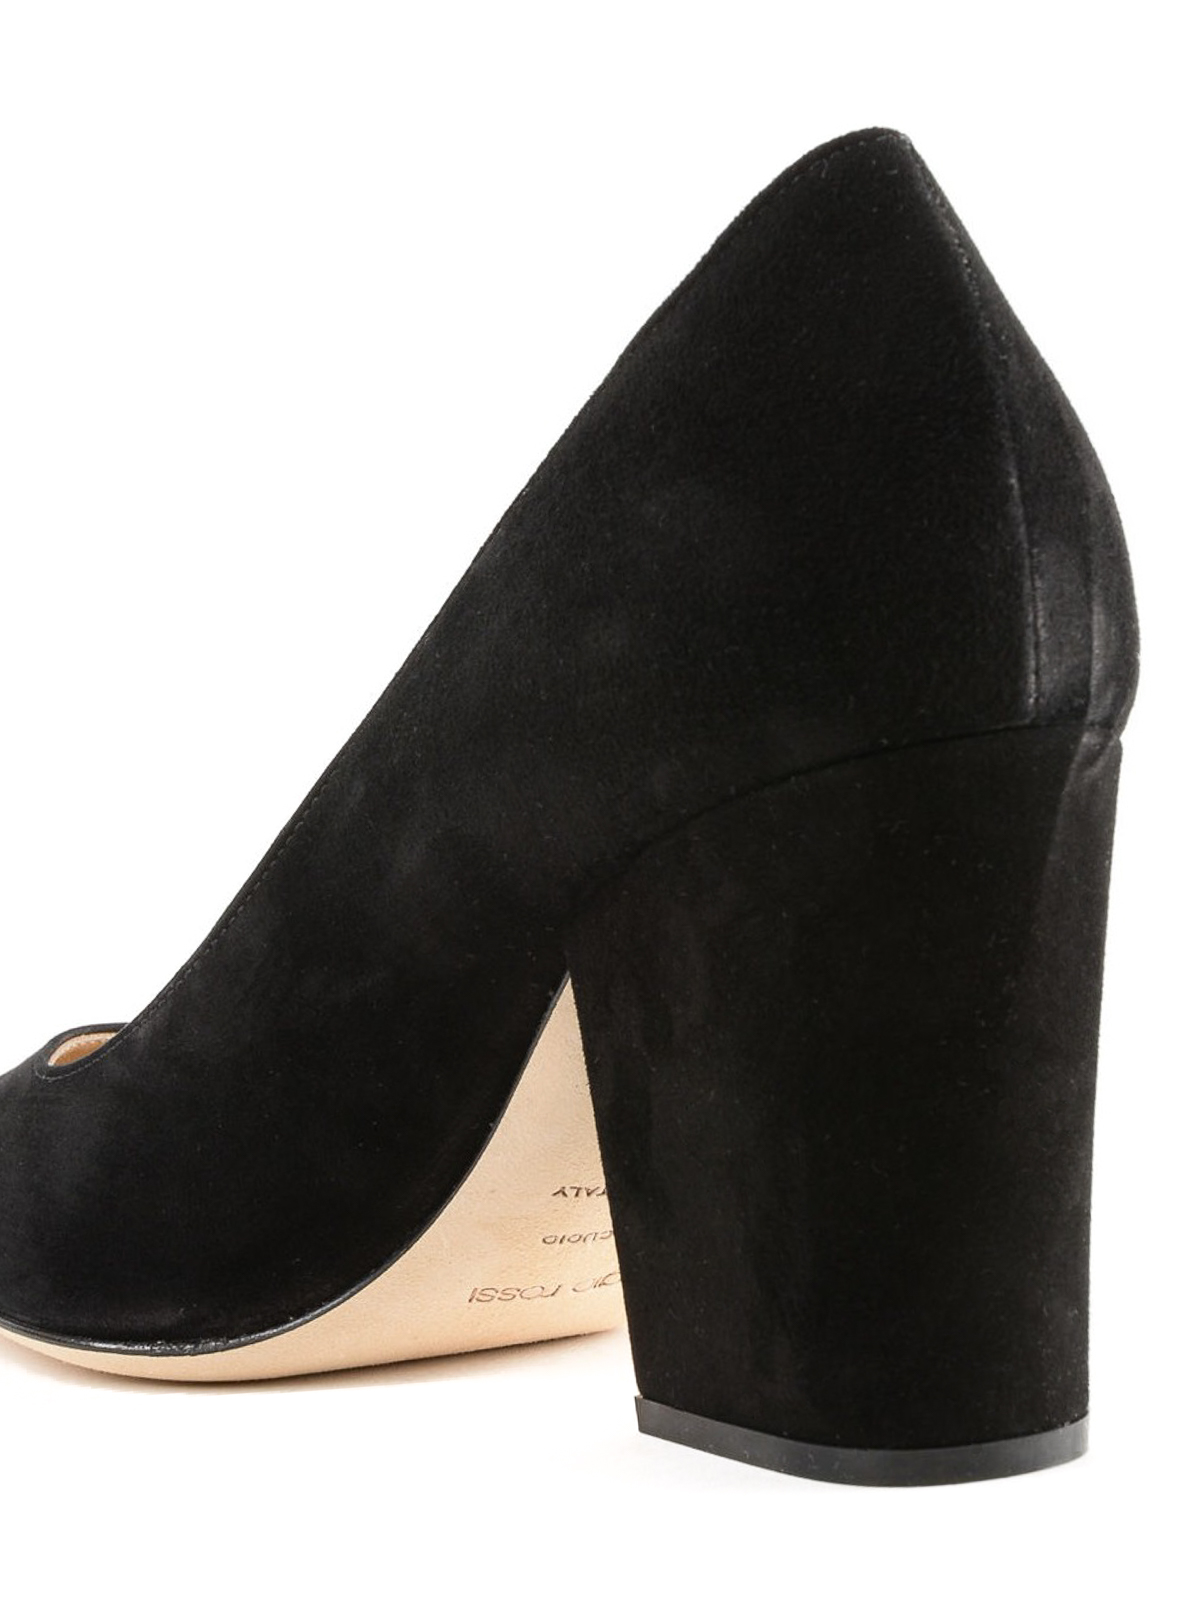 black suede court shoes mid heel